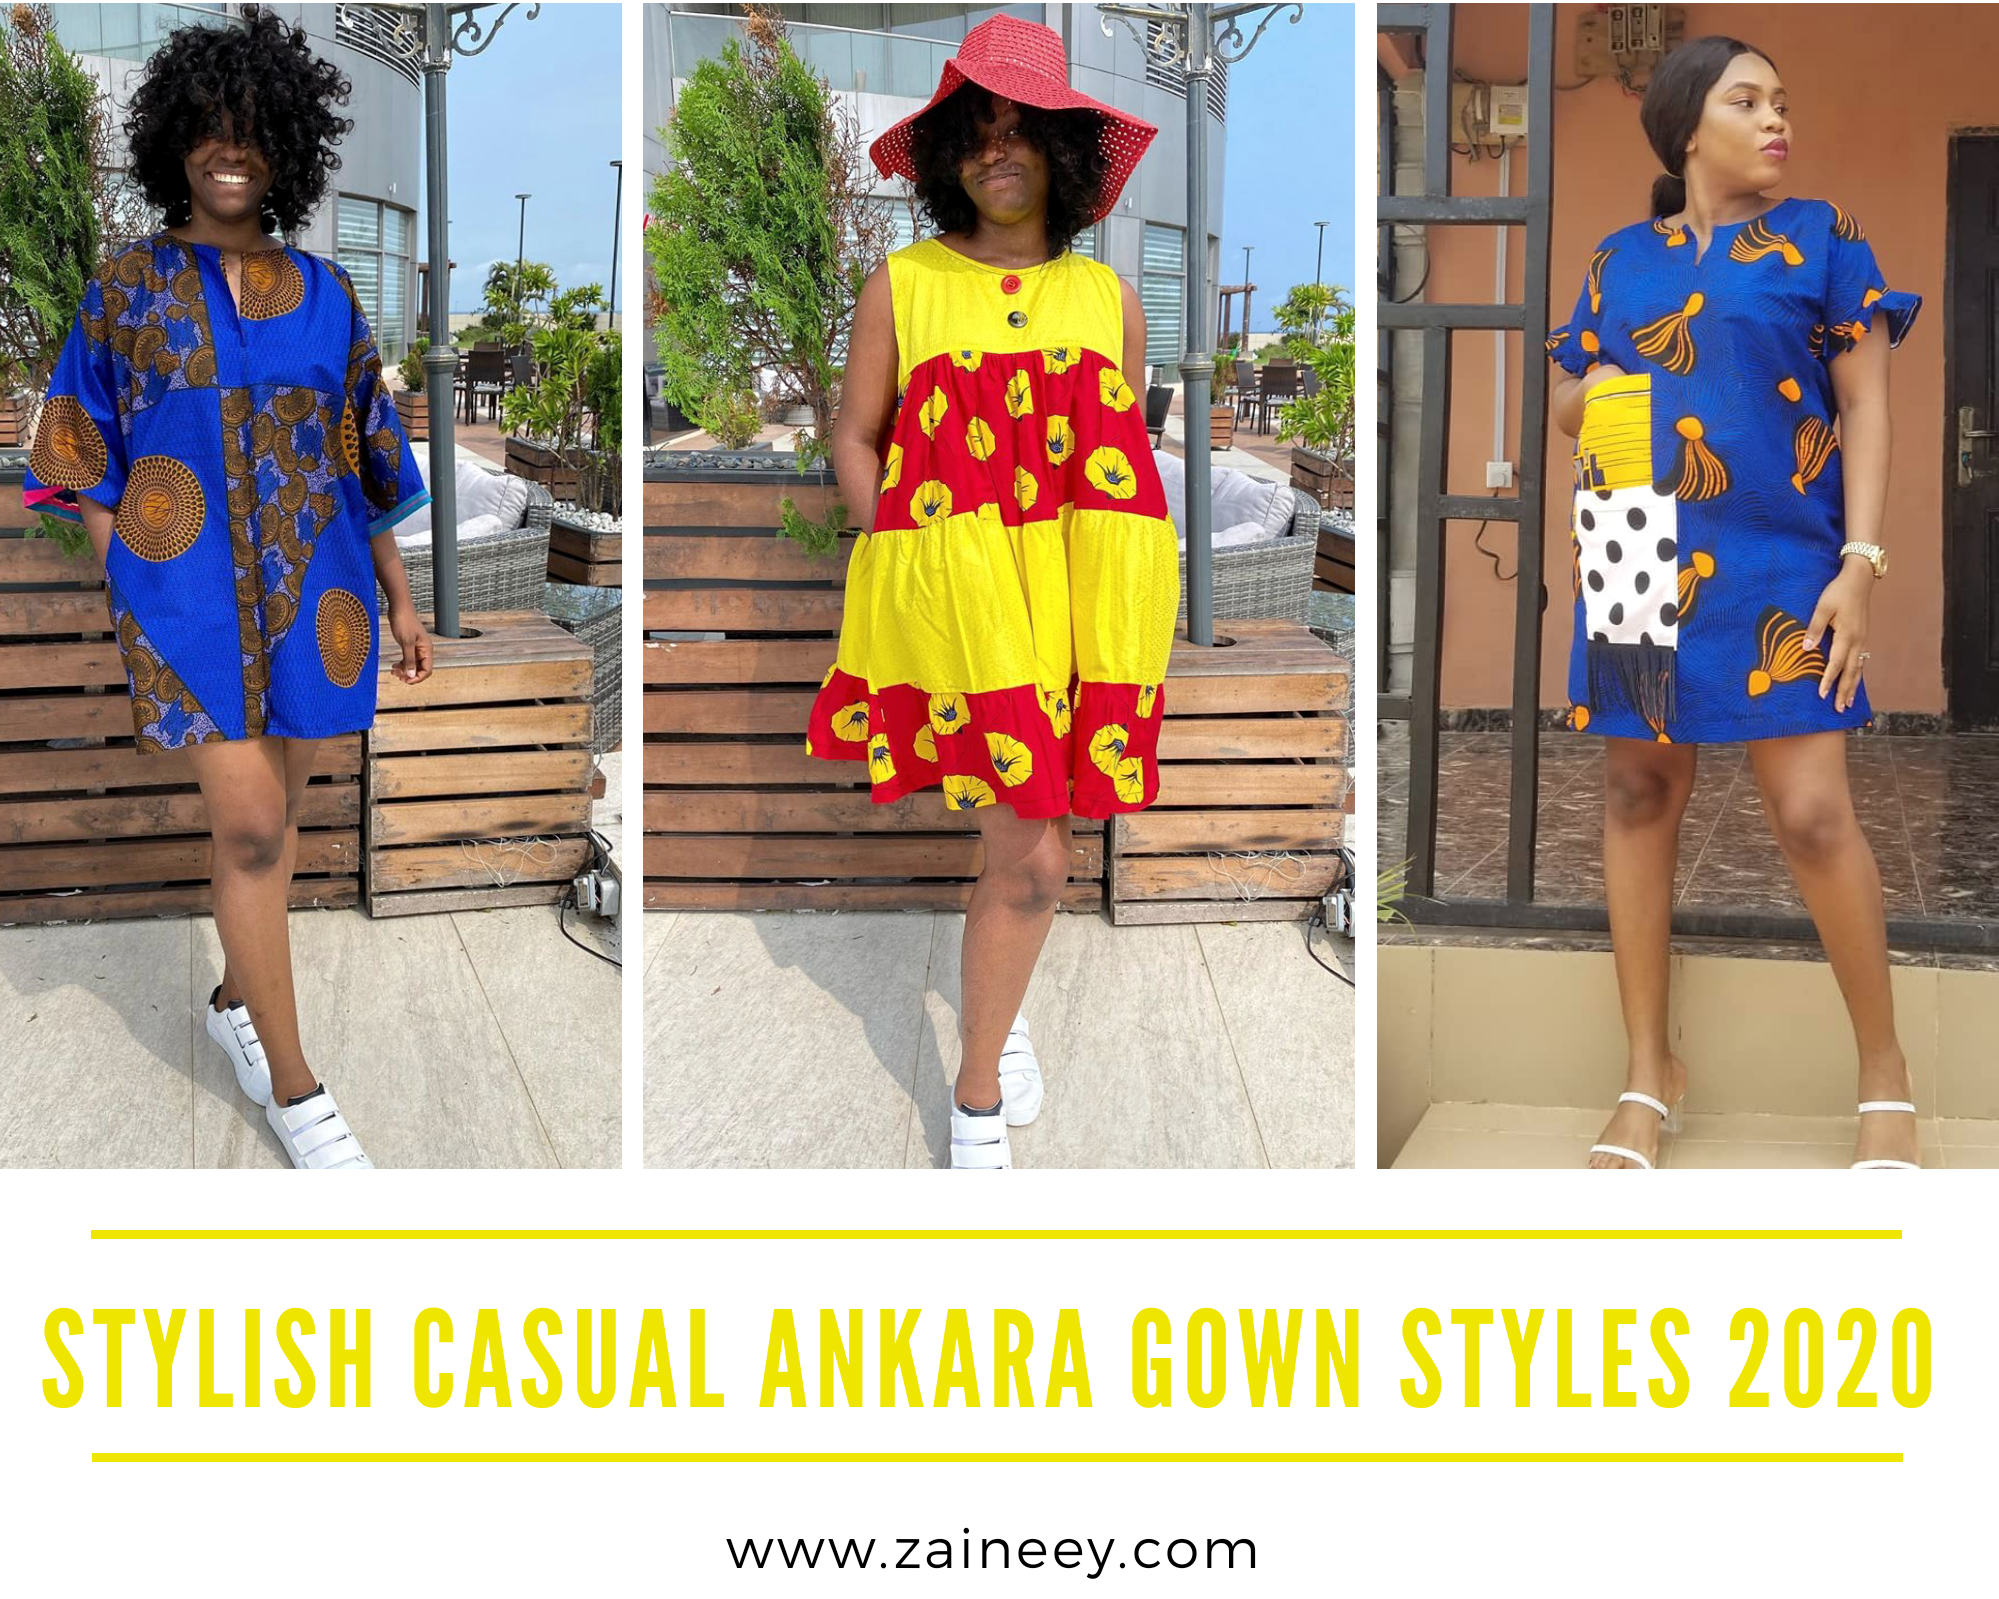 Ankara Gowns: Latest, Chic, and Stylish Casual Ankara Gown Styles 2020 |  Zaineey's Blog